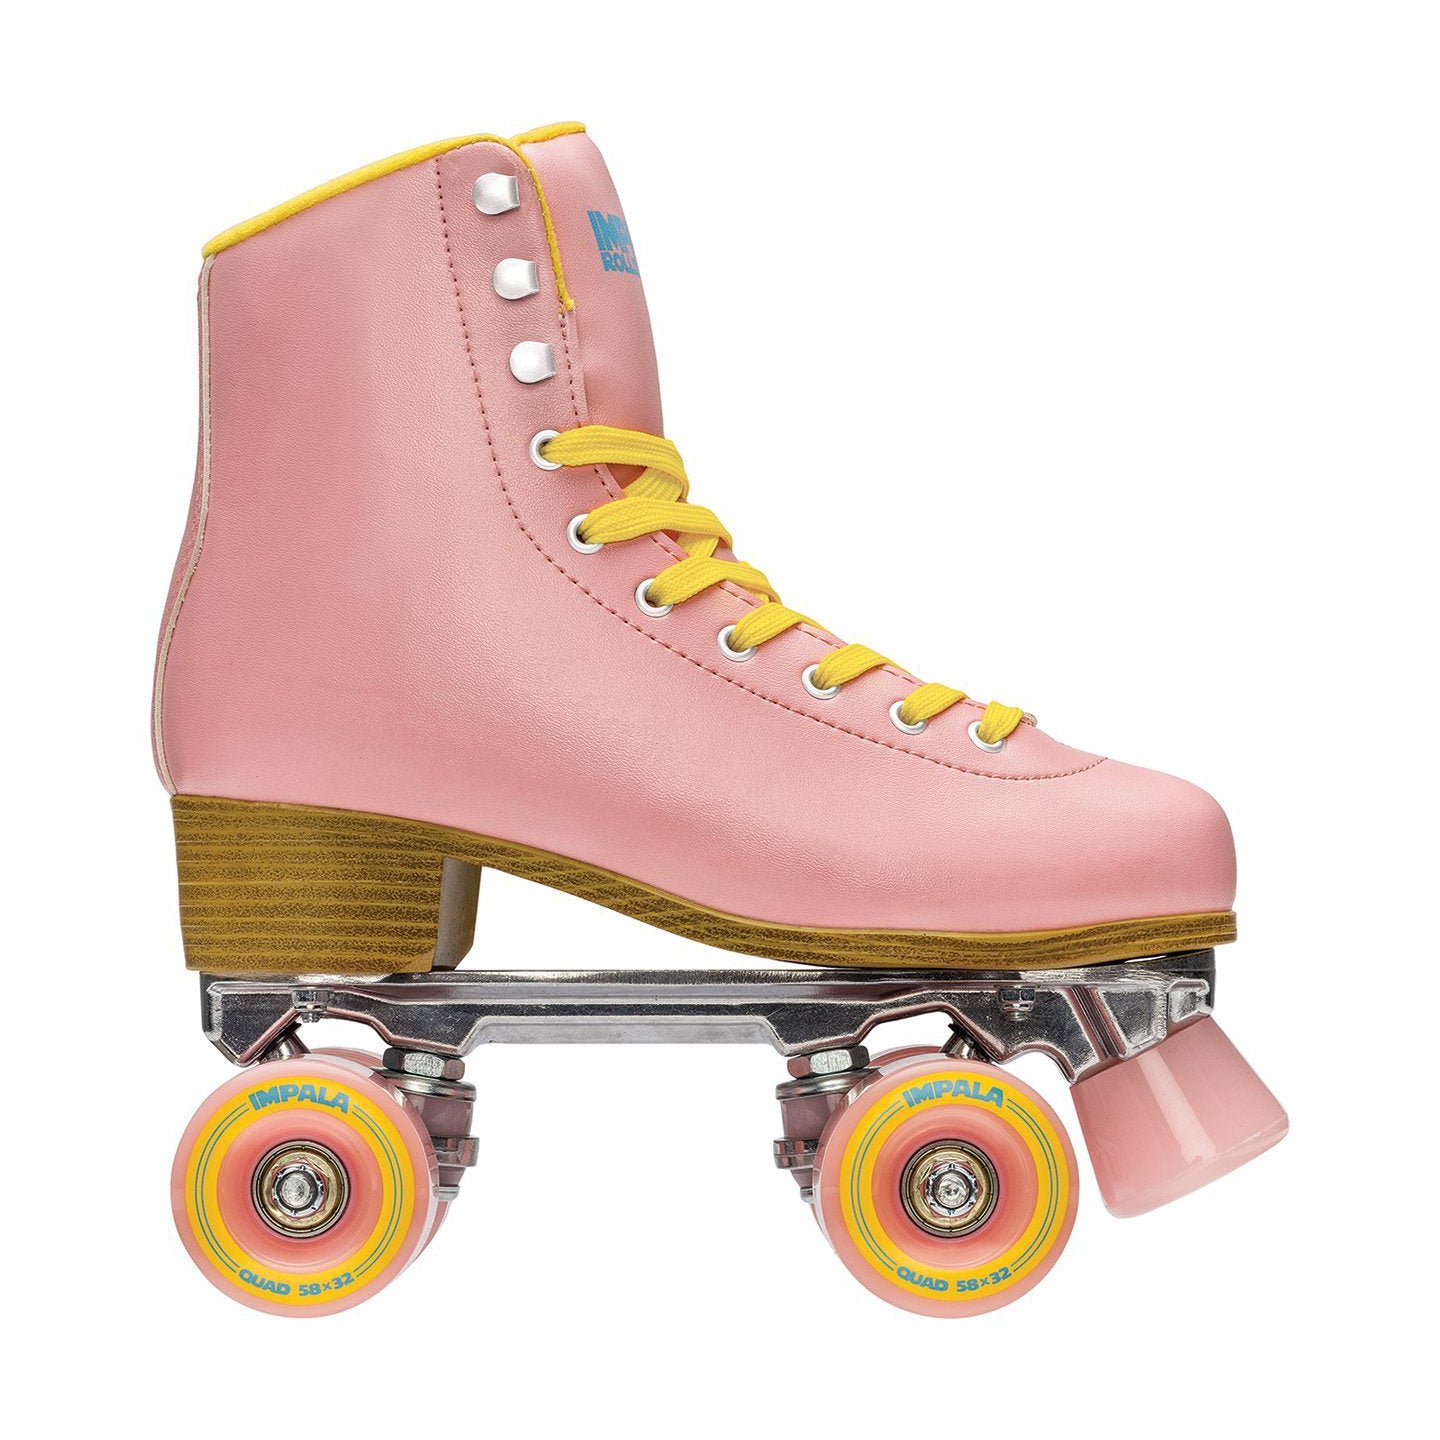 Impala Sidewalk Skates - Pink/Yellow